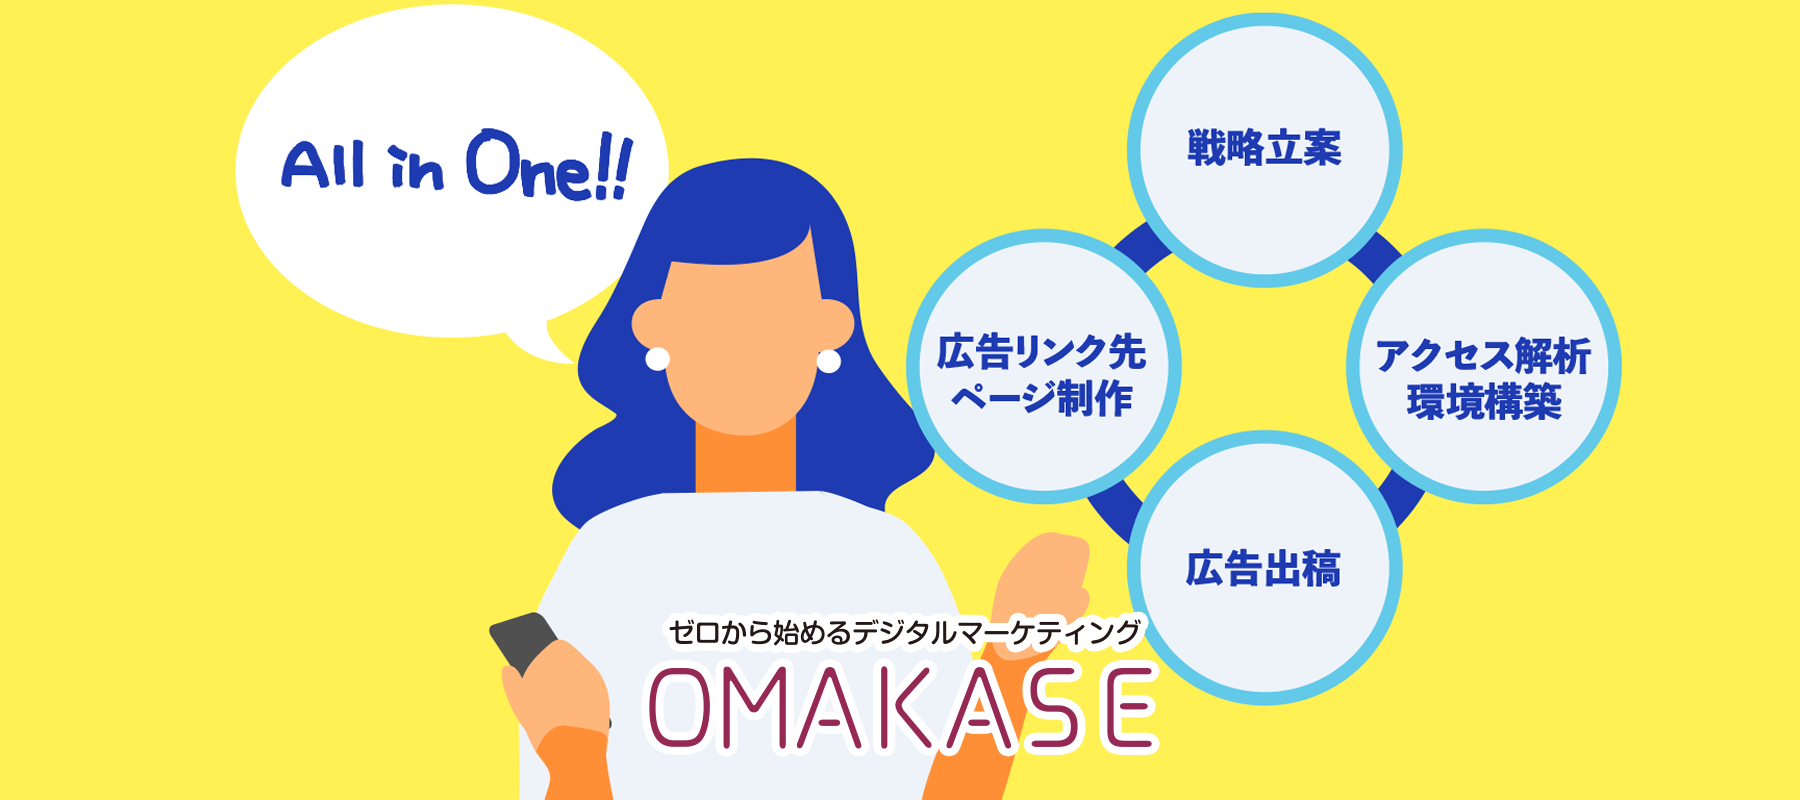 OMAKASEは最小構成で始めるデジタルマーケティングサービス